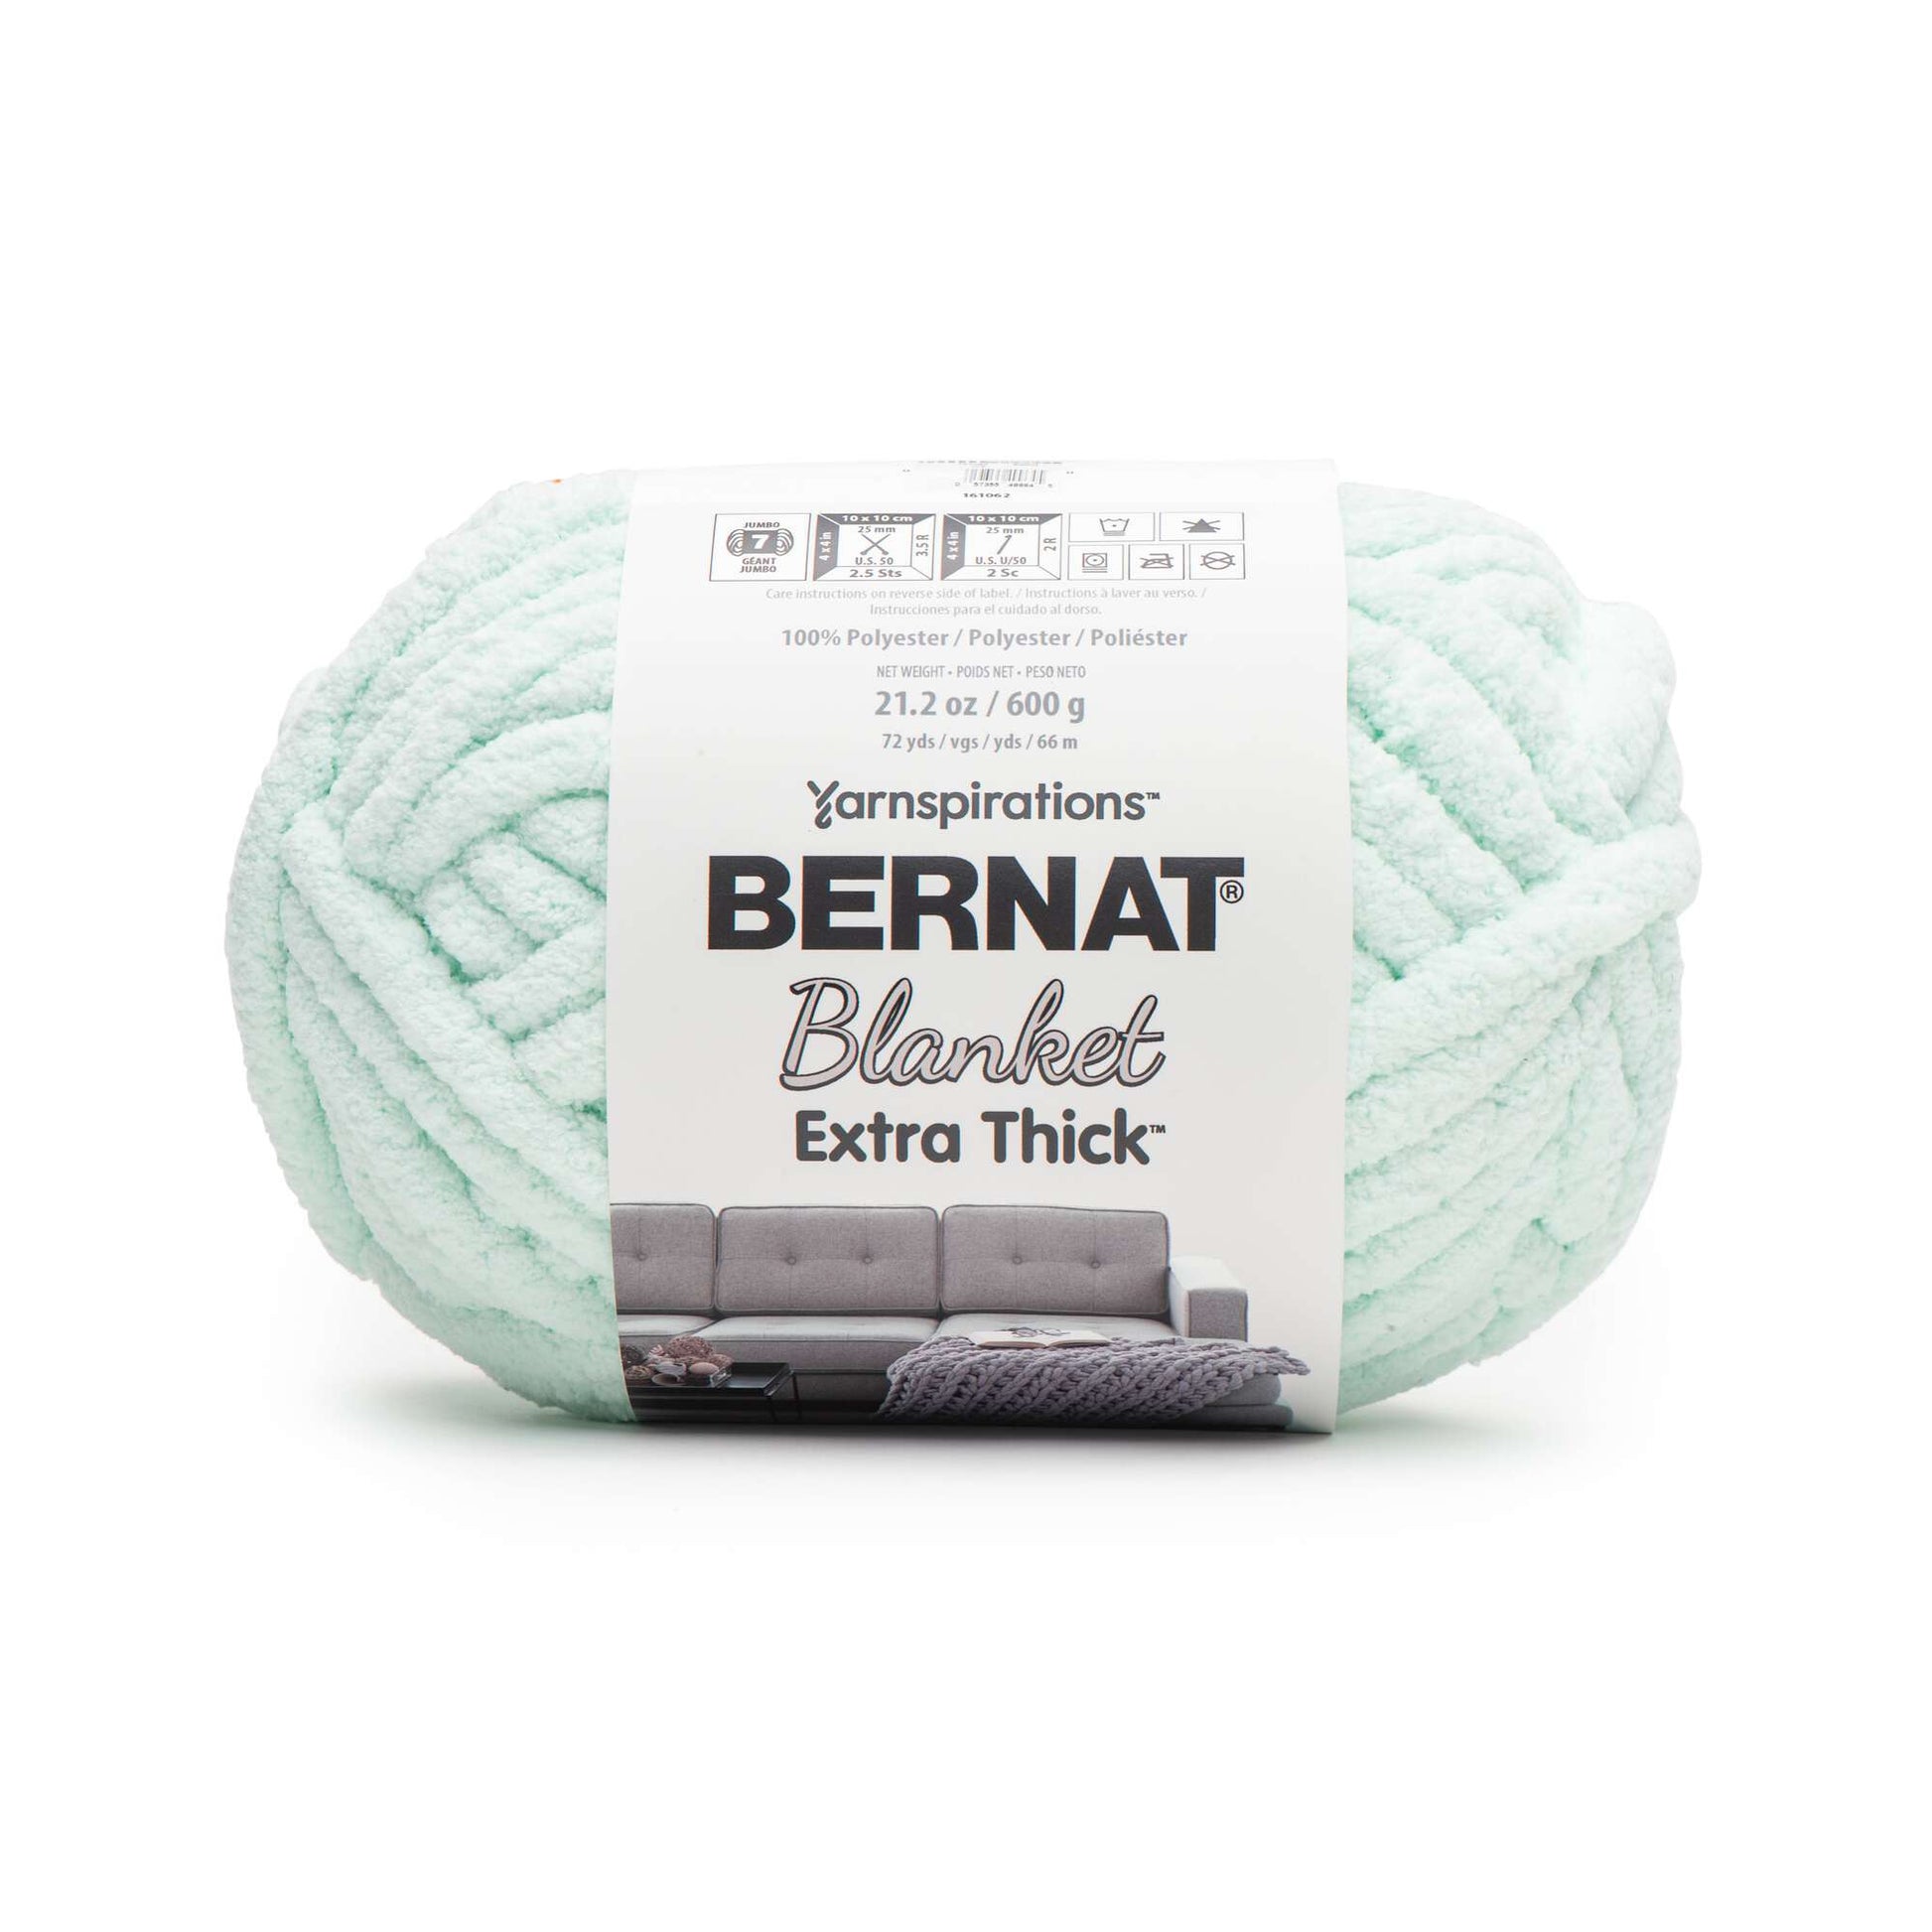 Bernat Blanket Extra Thick Yarn (600g/21.2oz) - Discontinued Shades Ice